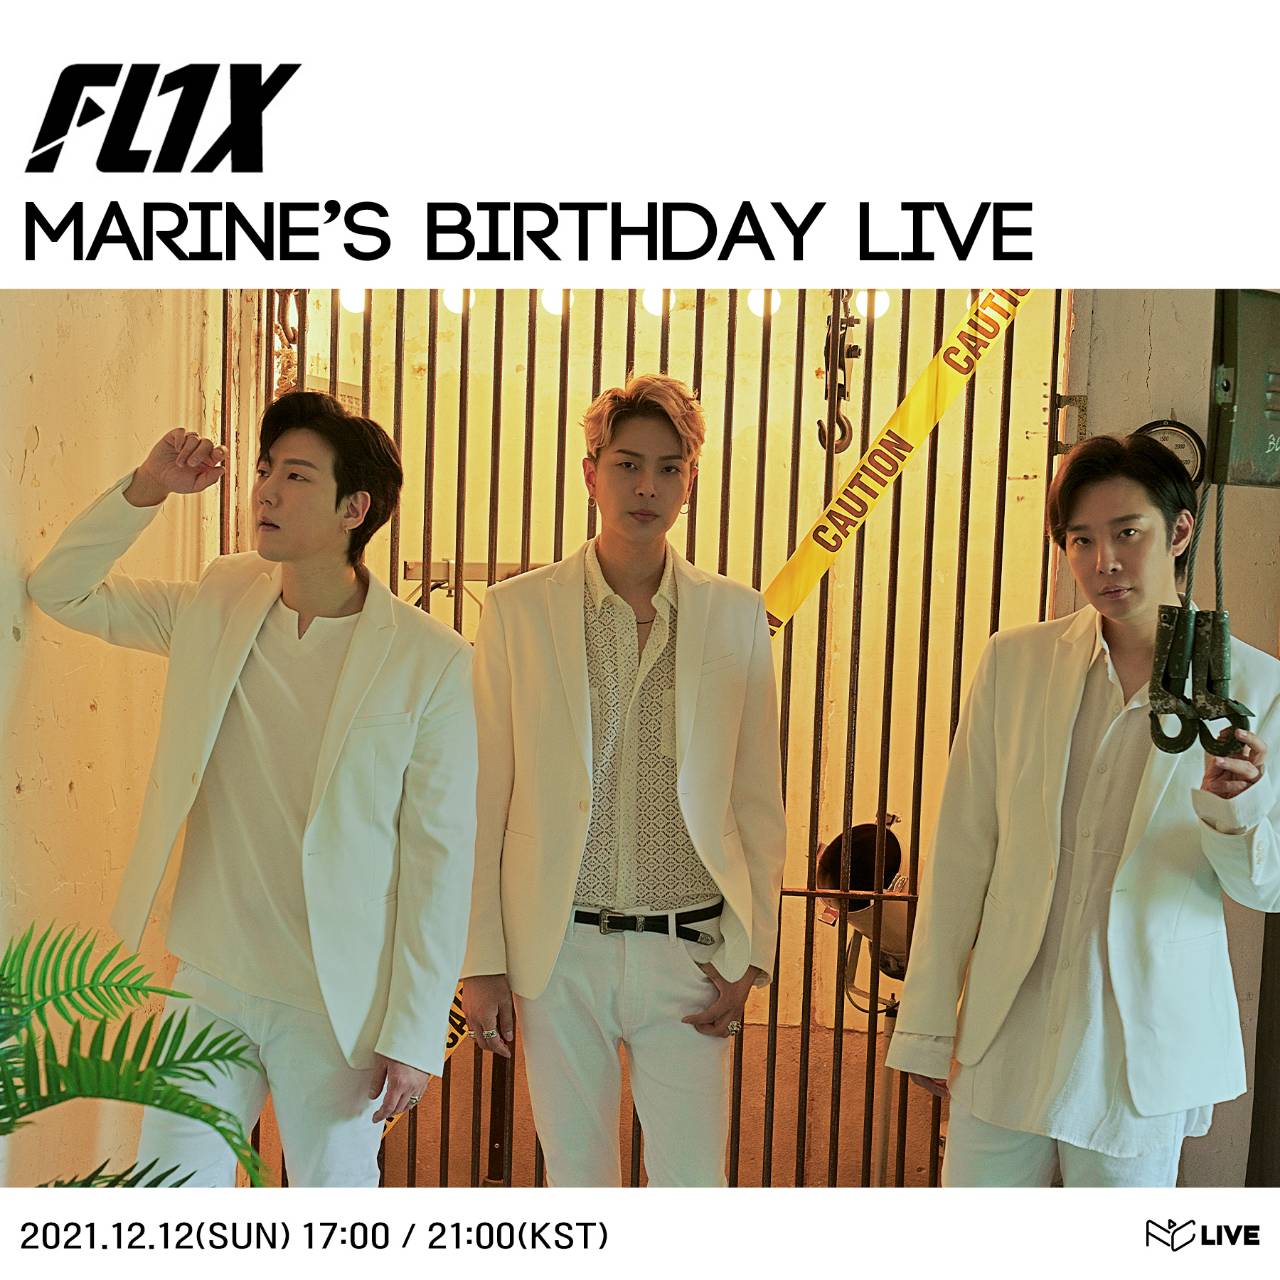 FL1X MARINE’S BIRTHDAY ONLINE LIVE [show2]